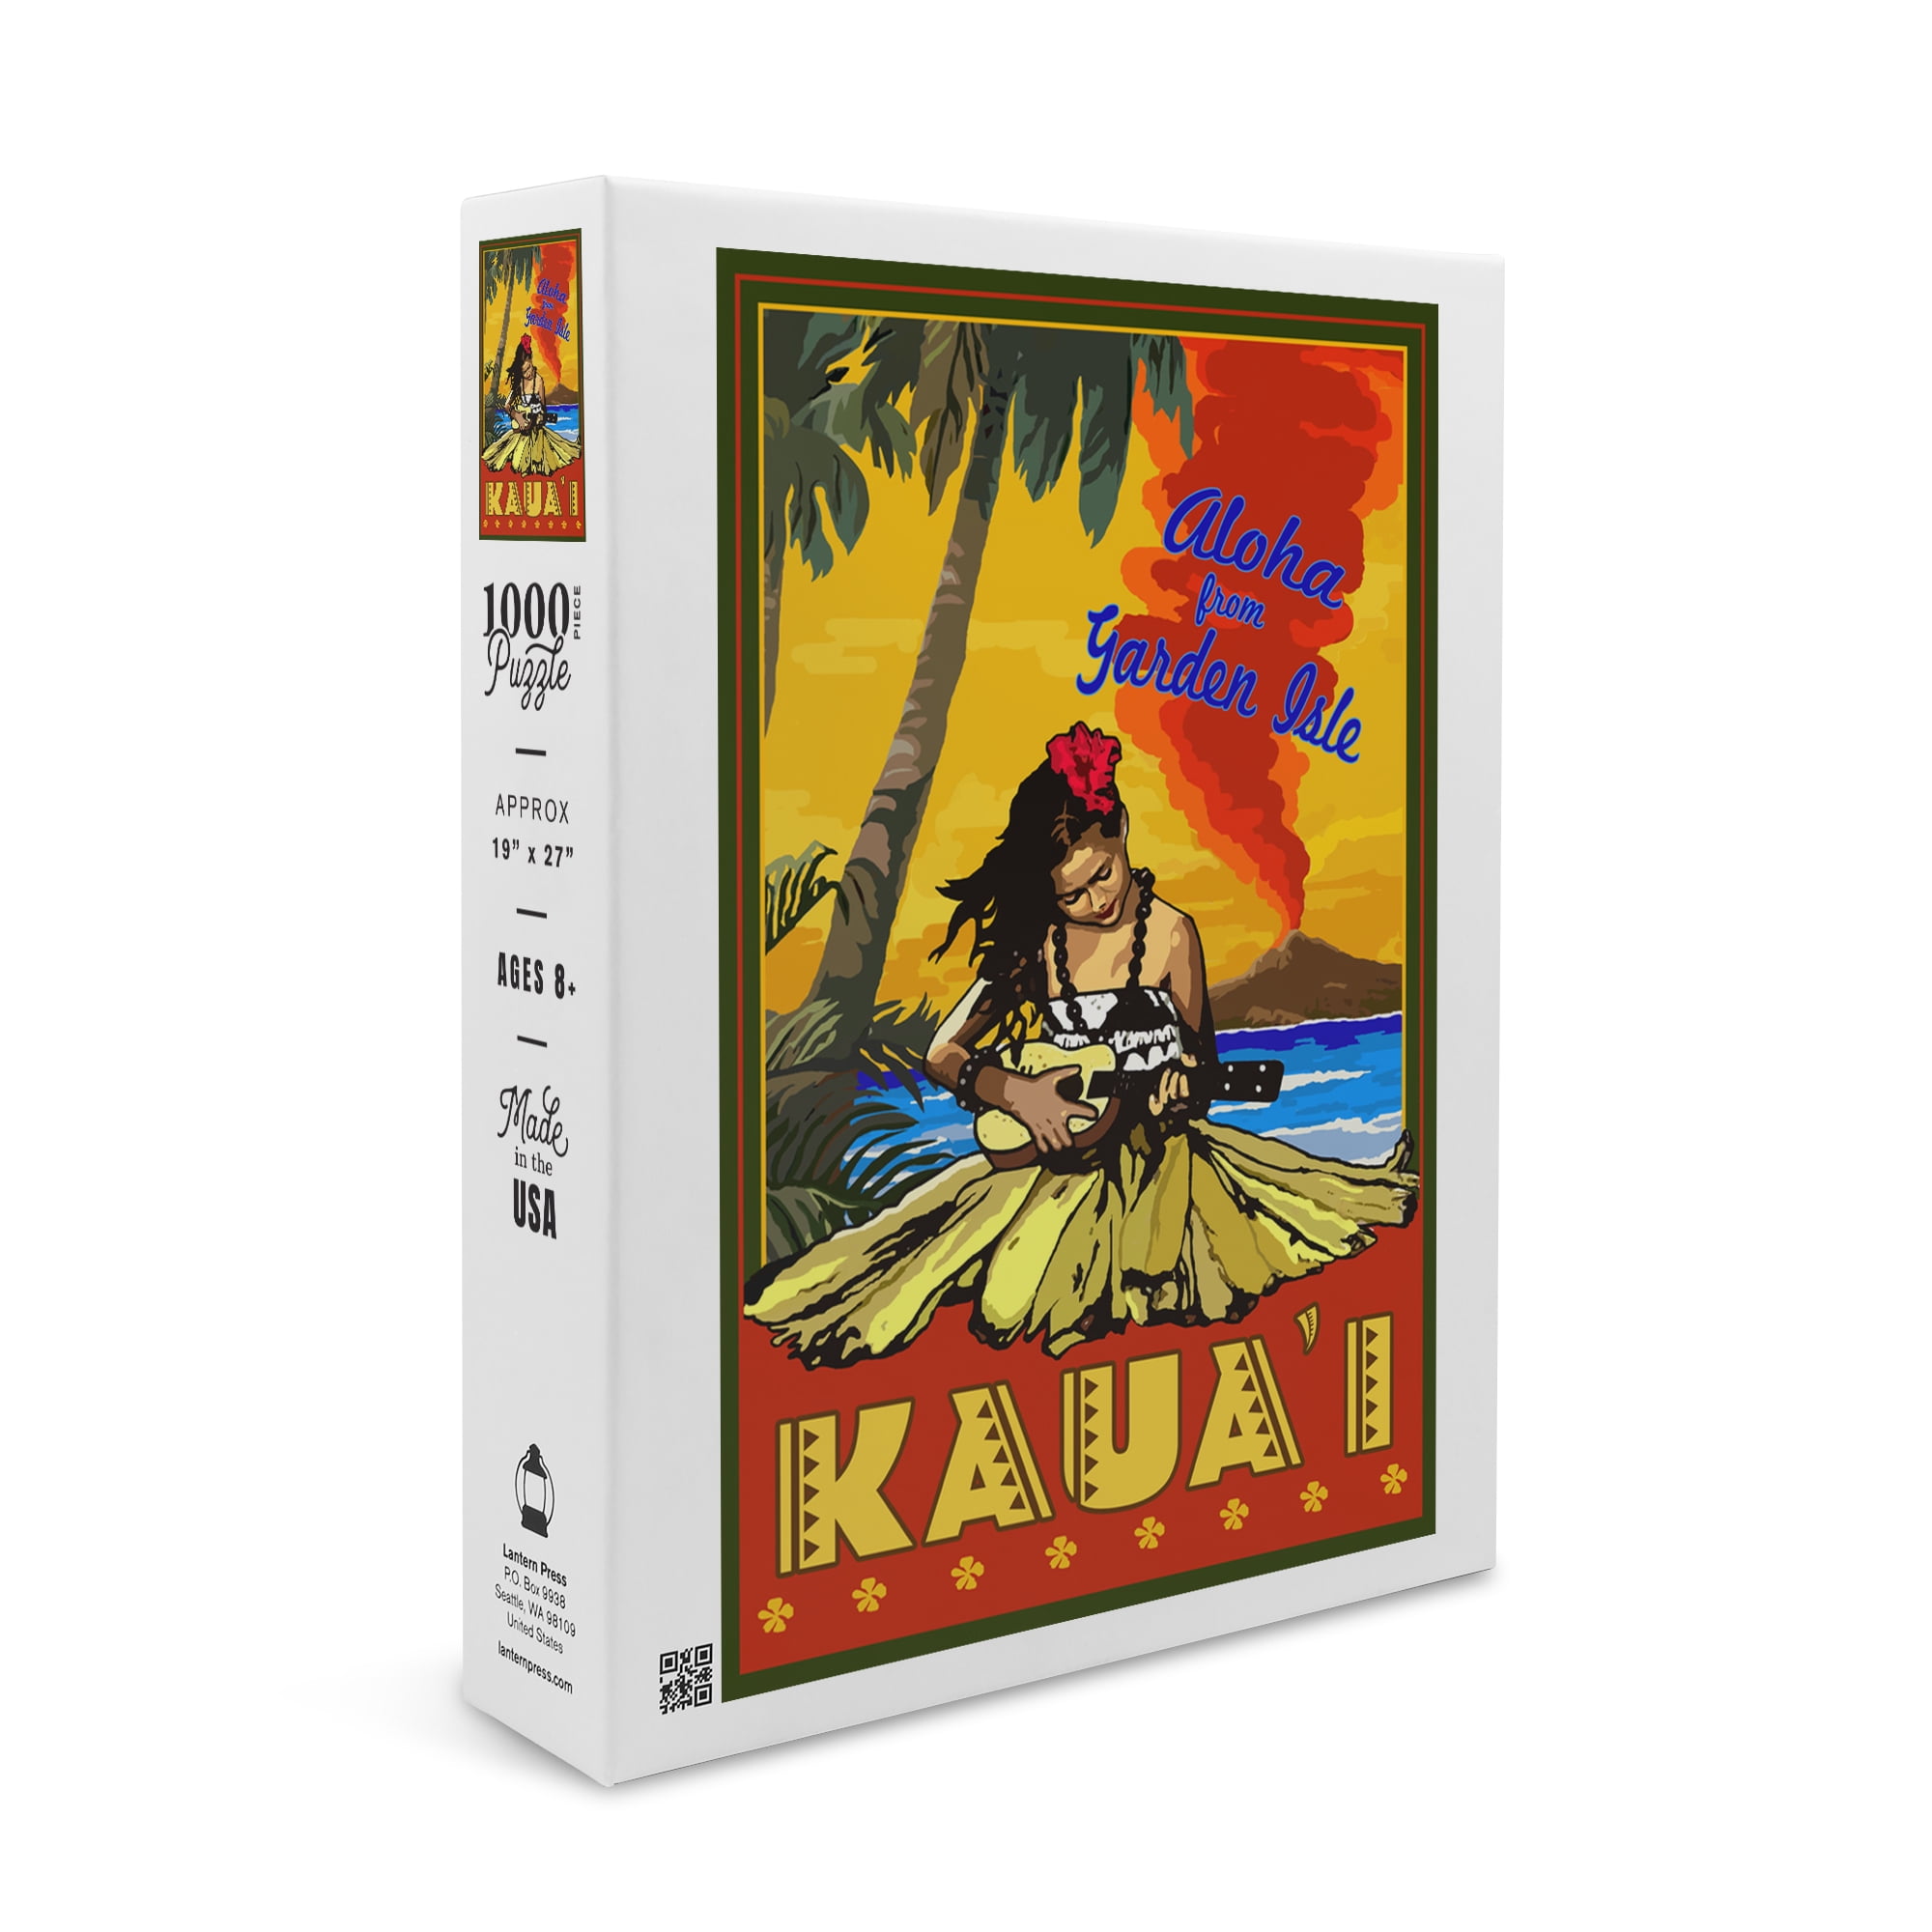 Hula Girl And Ukulele Kauai Hawaii 1000 Piece Puzzle Size 19x27 Challenging Jigsaw Puzzle